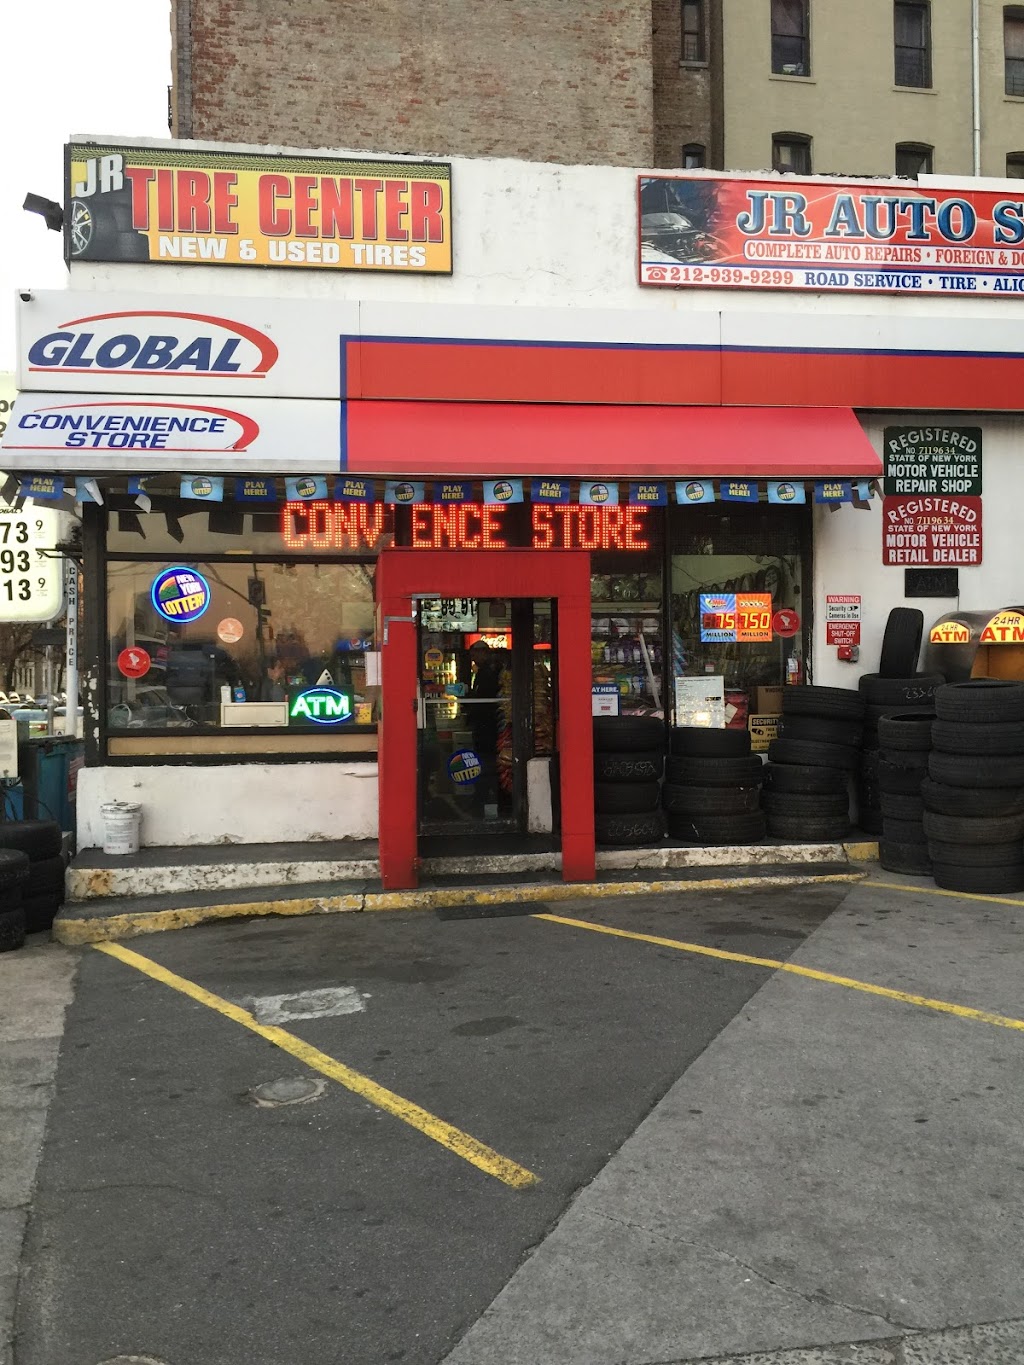 Global tire shop | 89 St Nicholas Pl, New York, NY 10032 | Phone: (212) 939-9299